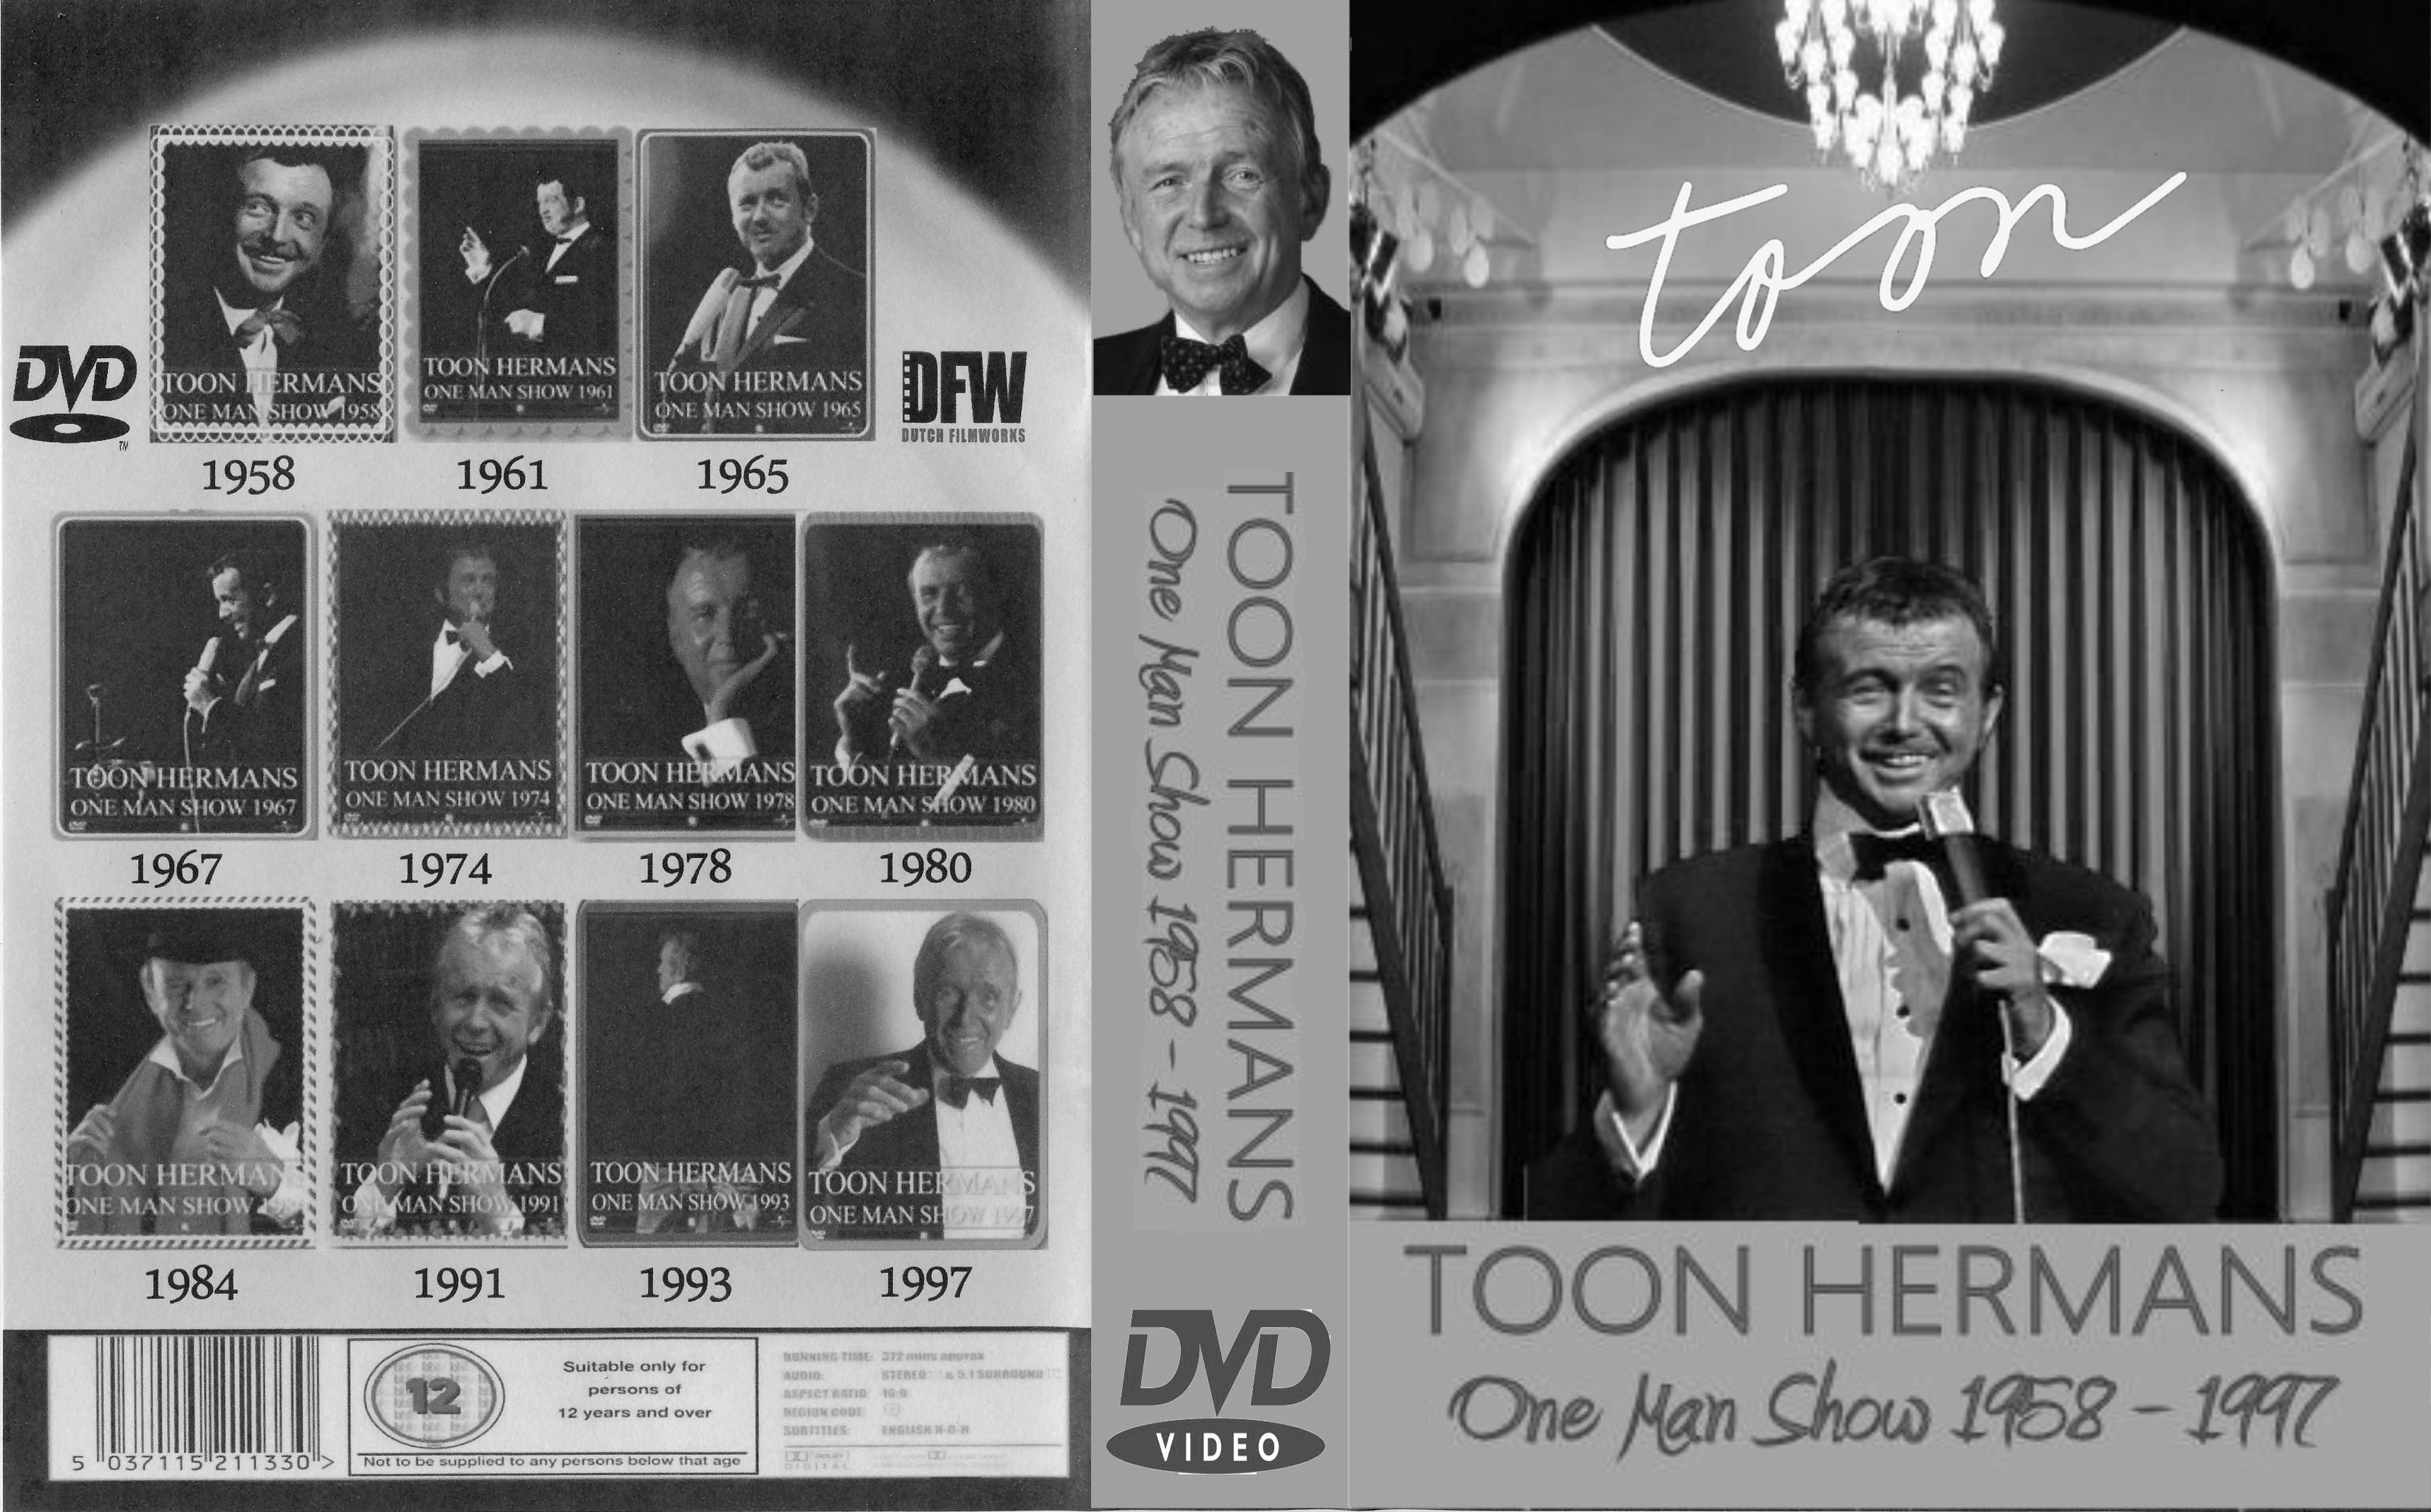 Toon Hermans One Man Show 1958 - 1997 - DvD 1 (1958)